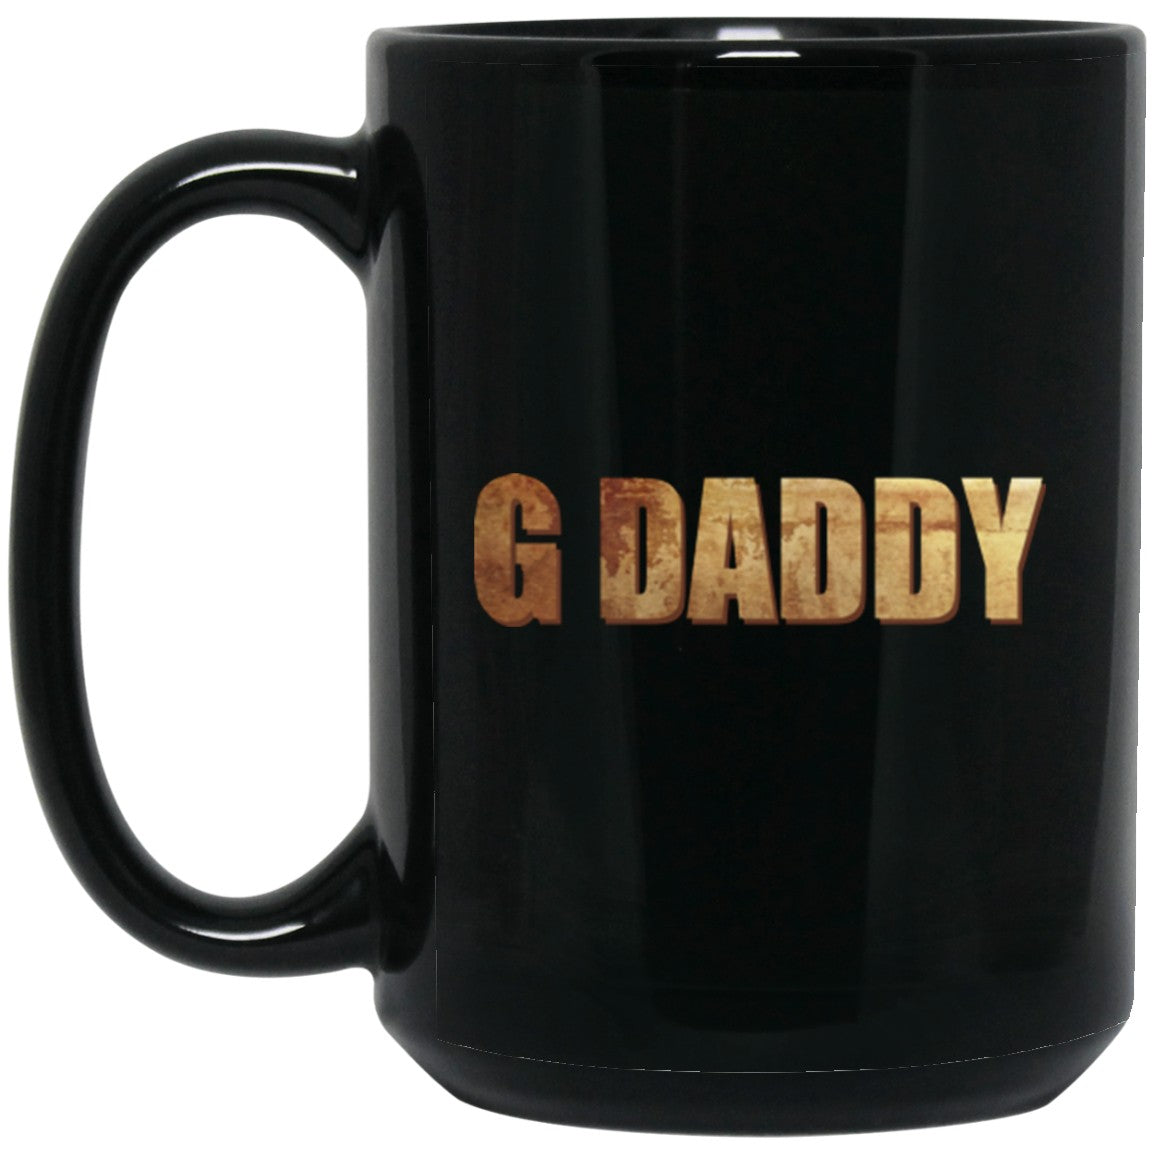 G Daddy Mug for Grandpa Gift Black Coffee Mugs - GoneBold.gift